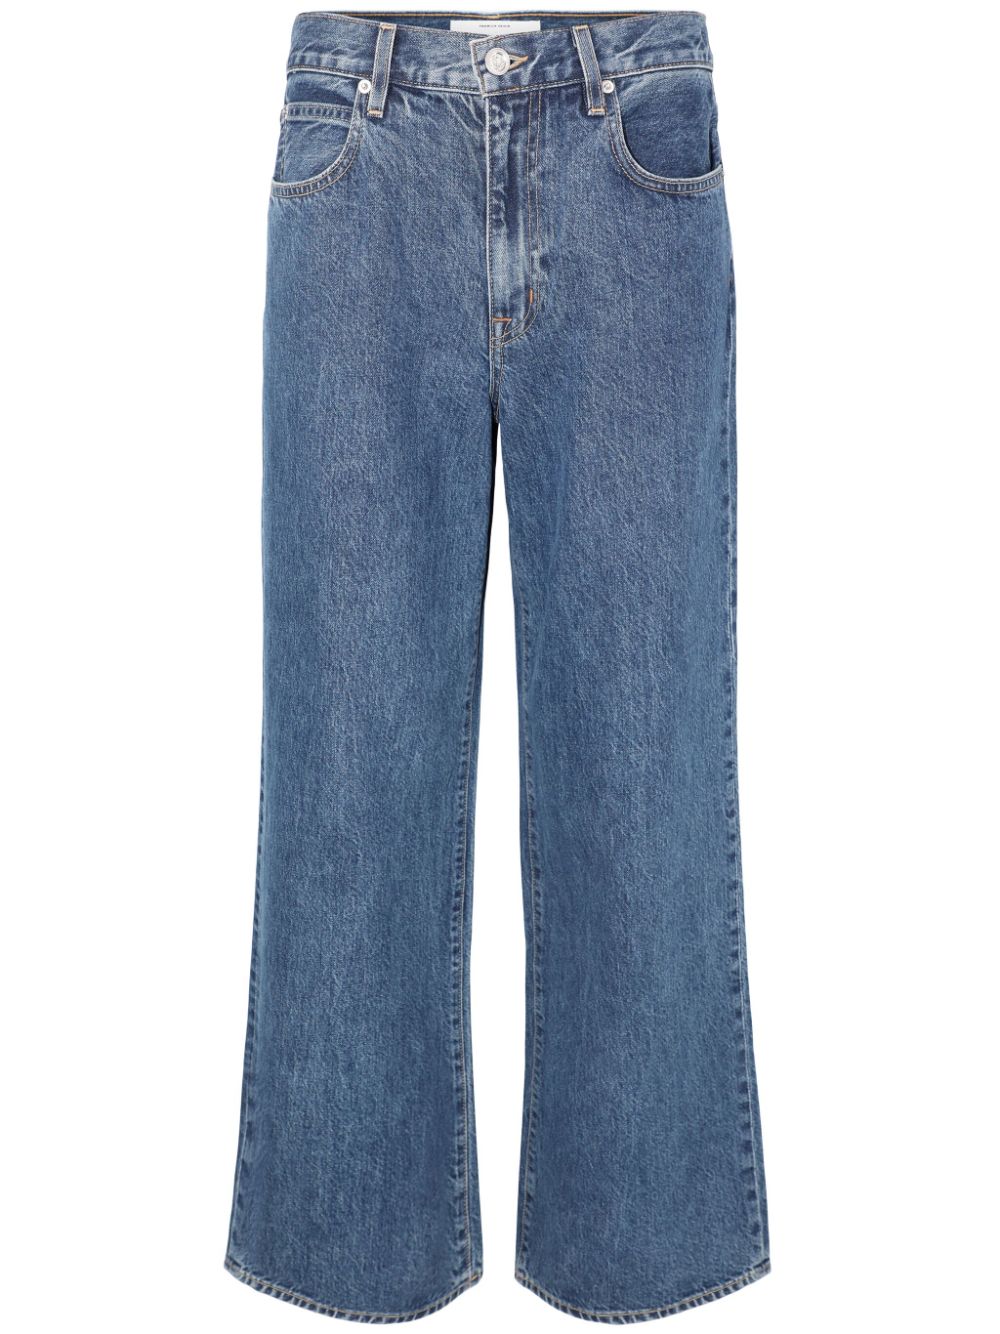 Selena jeans